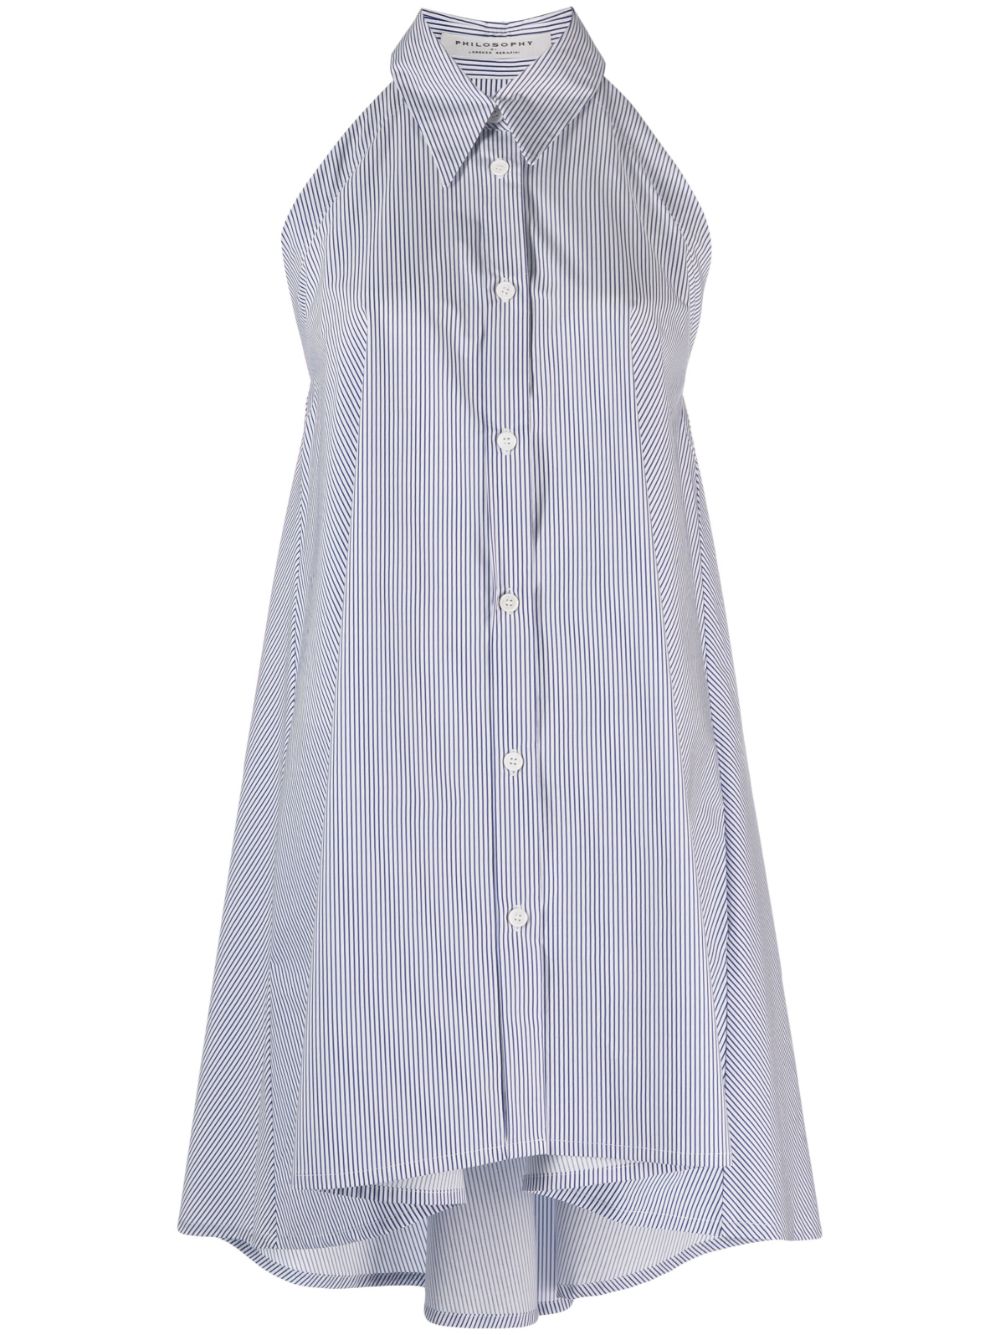 Philosophy Di Lorenzo Serafini Striped Sleeveless Shirt Dress In White/blue Stripes